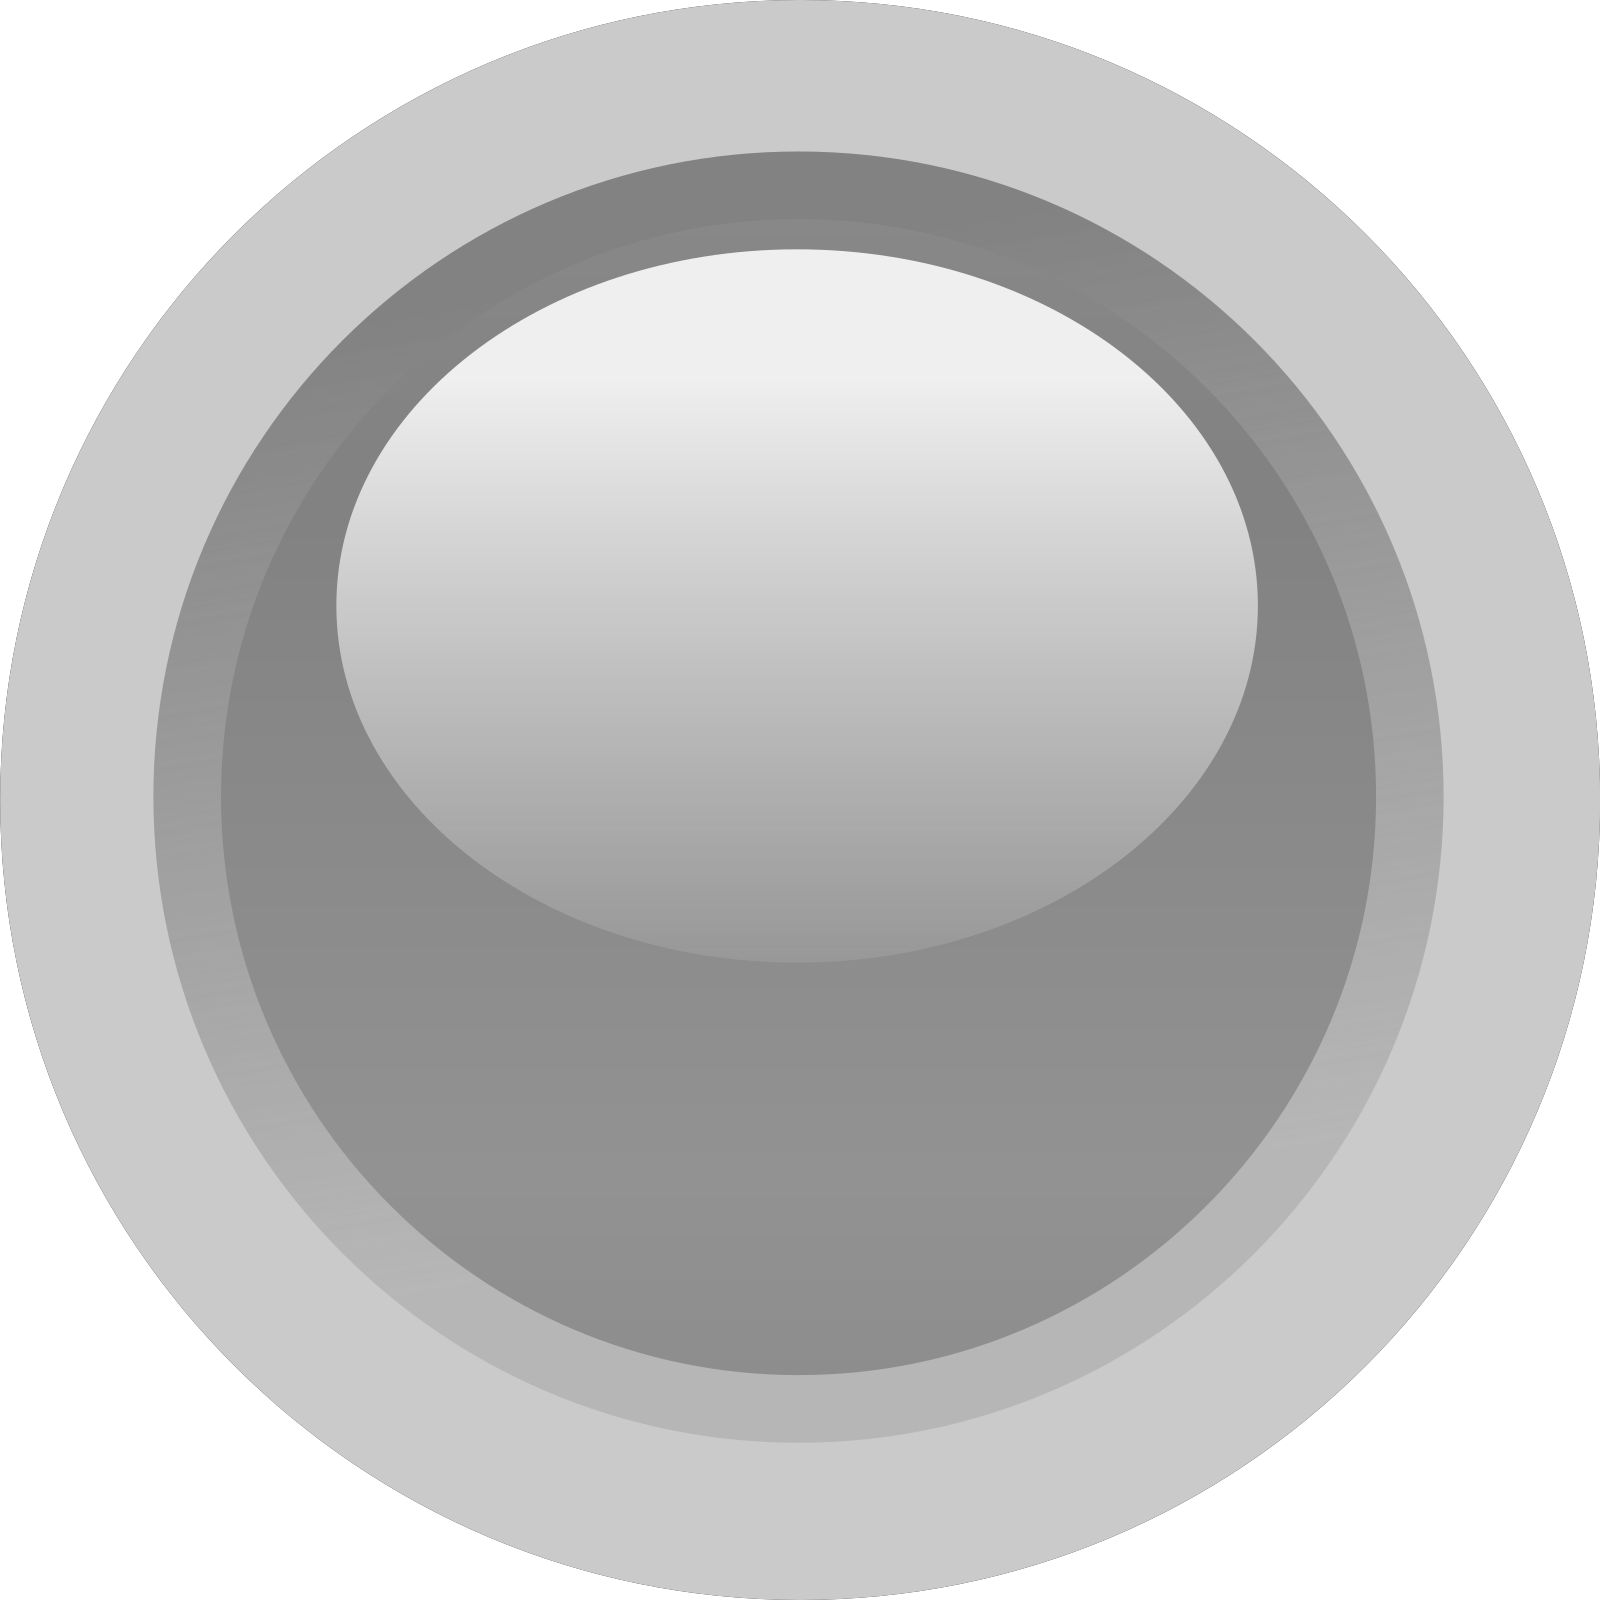 Round icons. Круглая кнопка. Серая кнопка. Металлическая круглая кнопка. Круглая кнопка на прозрачном фоне.